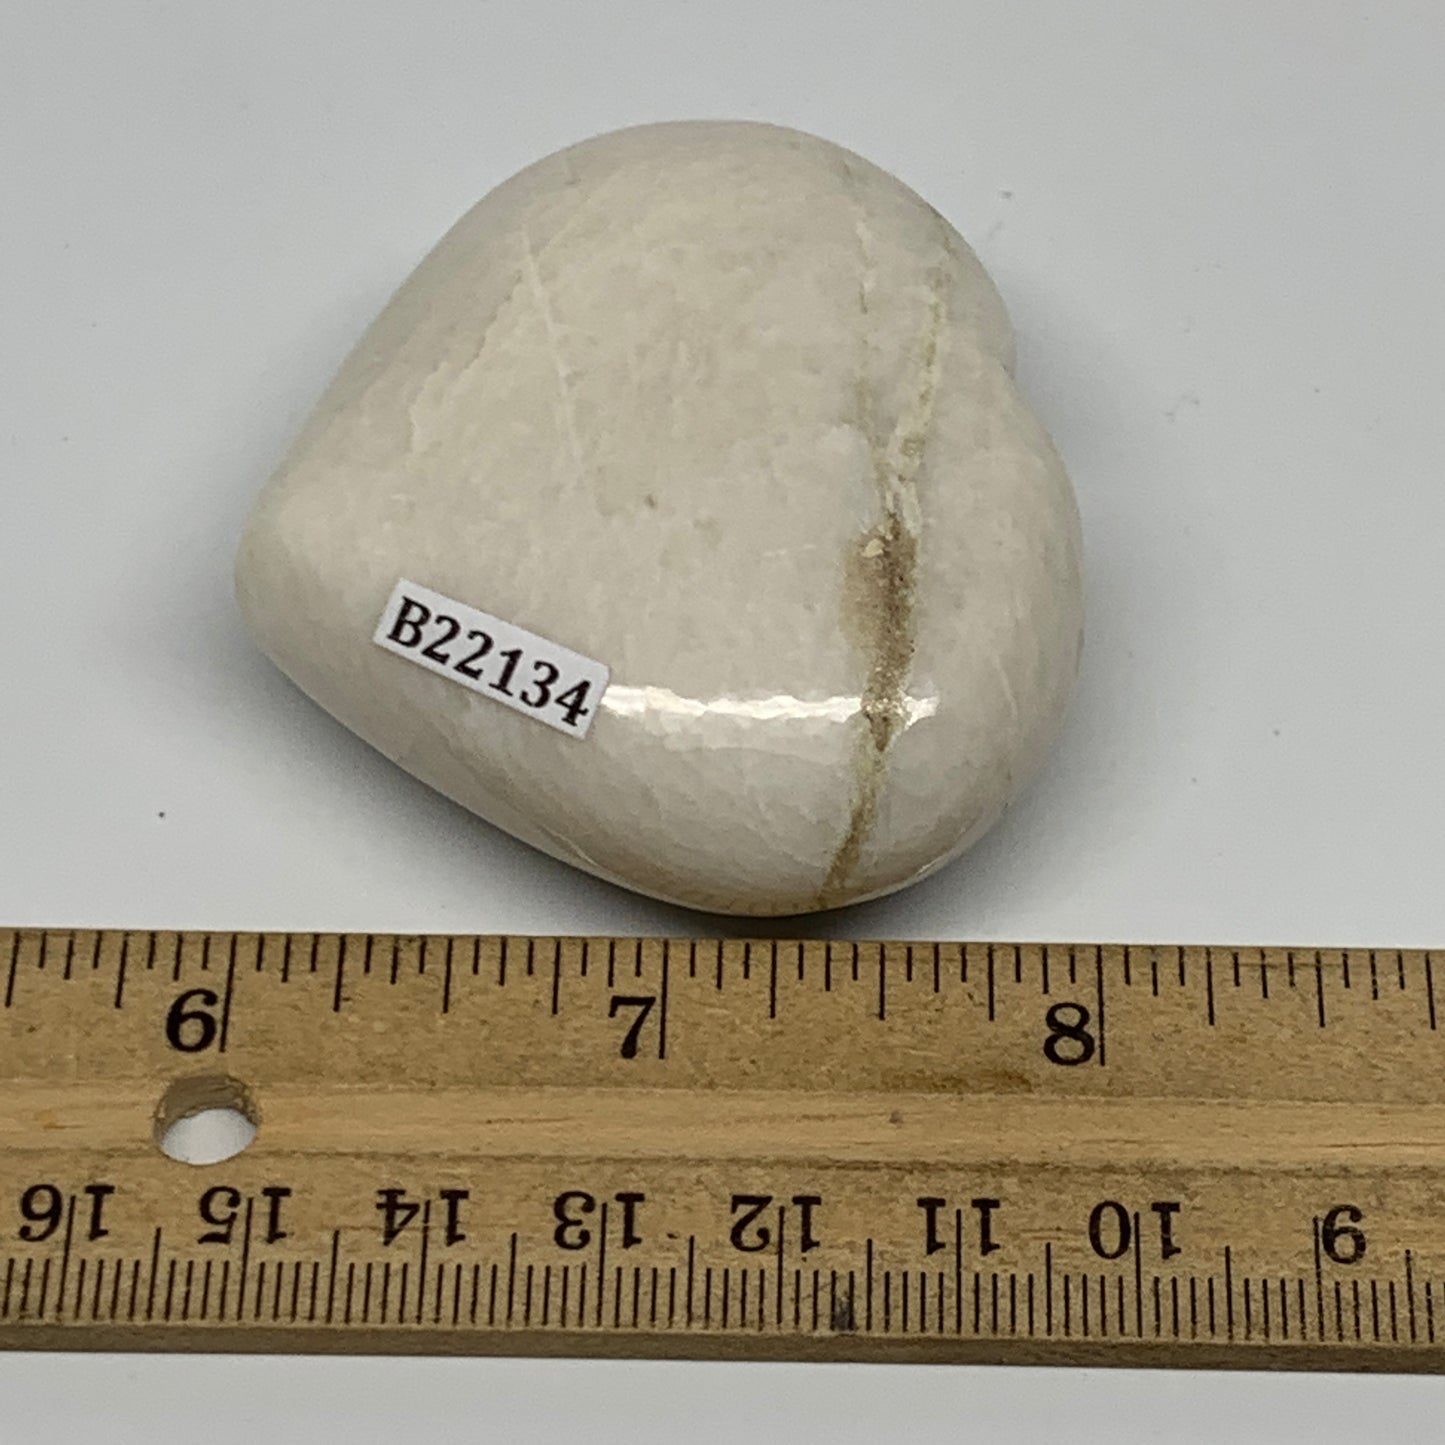 92.6g, 2"x2.3"x0.9", White Moonstone Heart Crystal Polished Gemstone, B22134